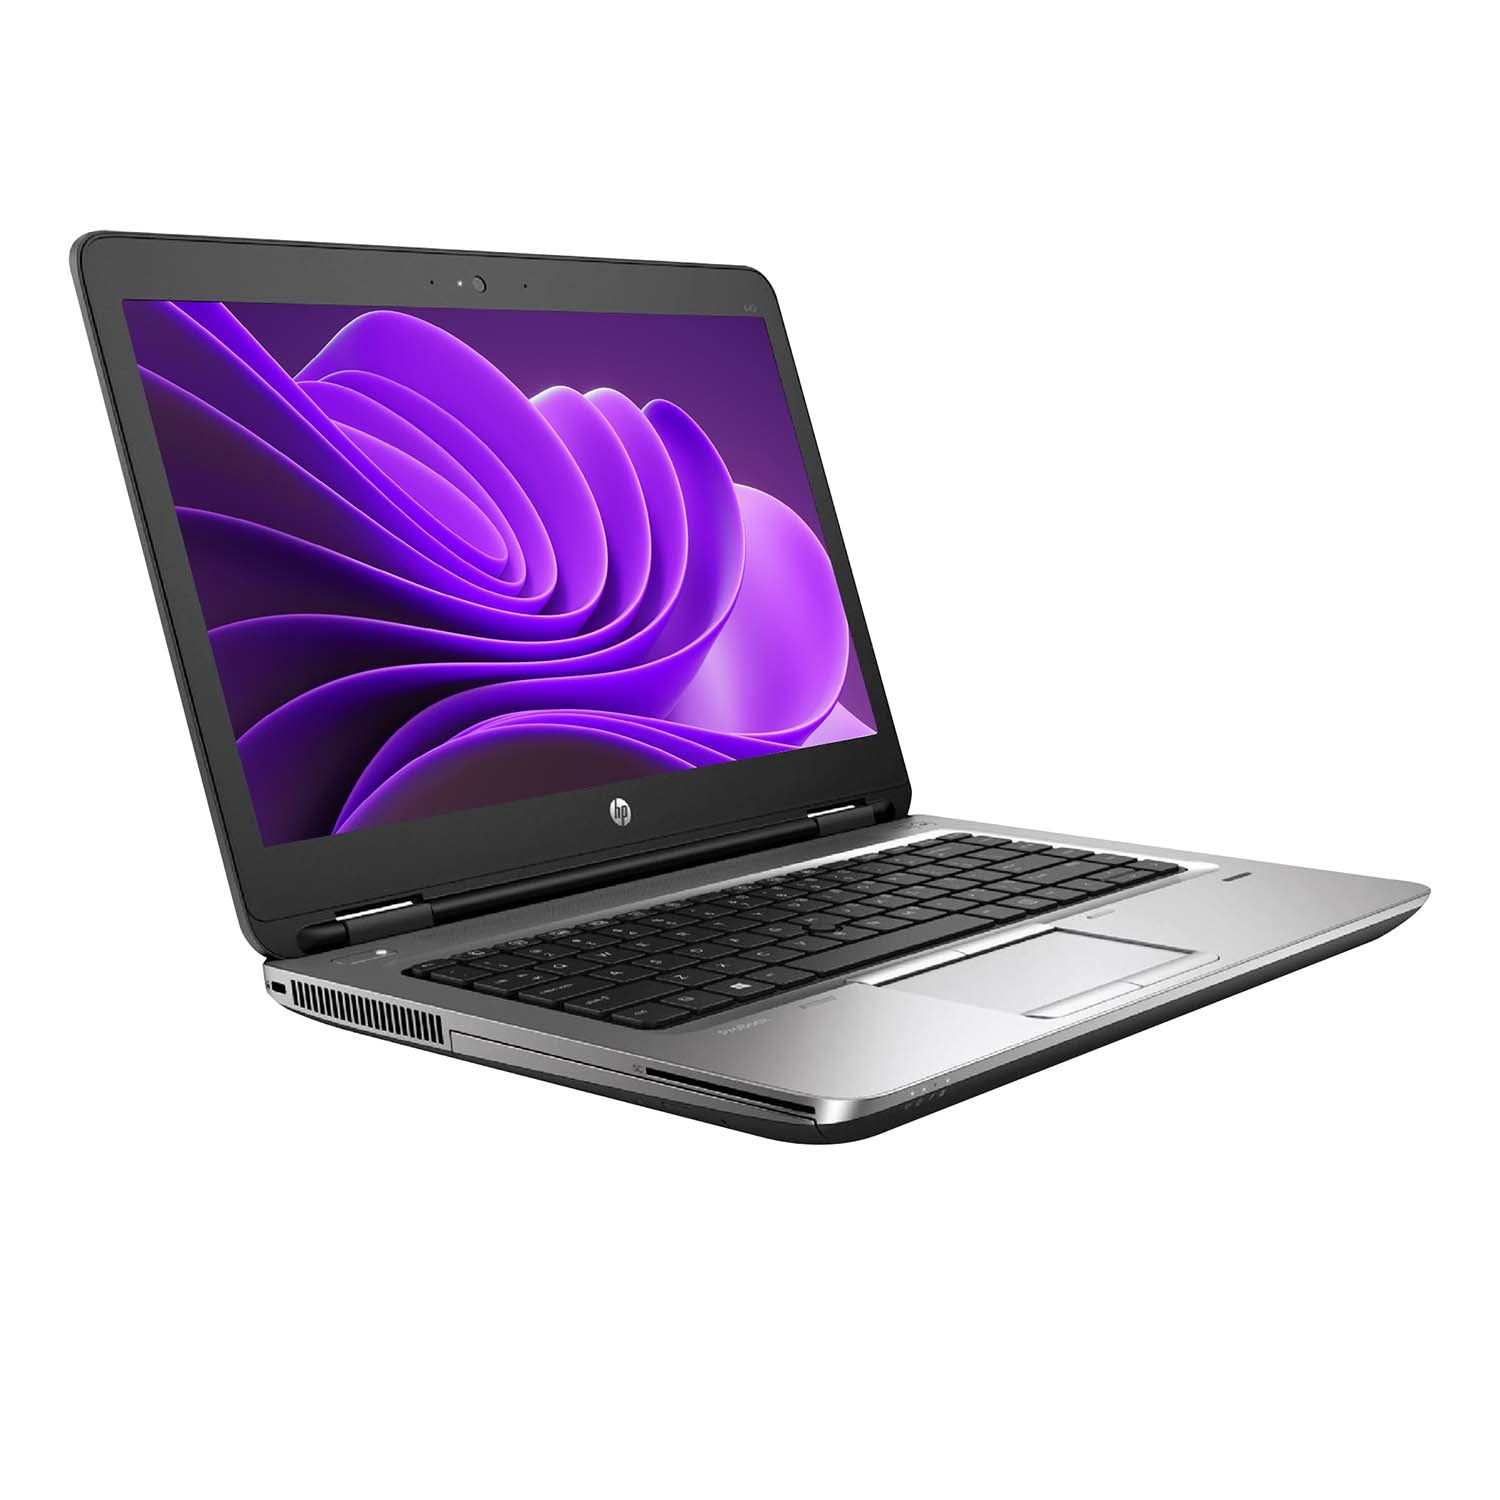 HP ProBook 640 G2 Laptop 14 inch HD Display, Intel Core i7-6600U Up to 3.40 GHz, 8GB - 16GB RAM, 256GB - 1TB SSD, Backlit Keyboard, Webcam, WiFi, Windows 10 Pro - Refurbished